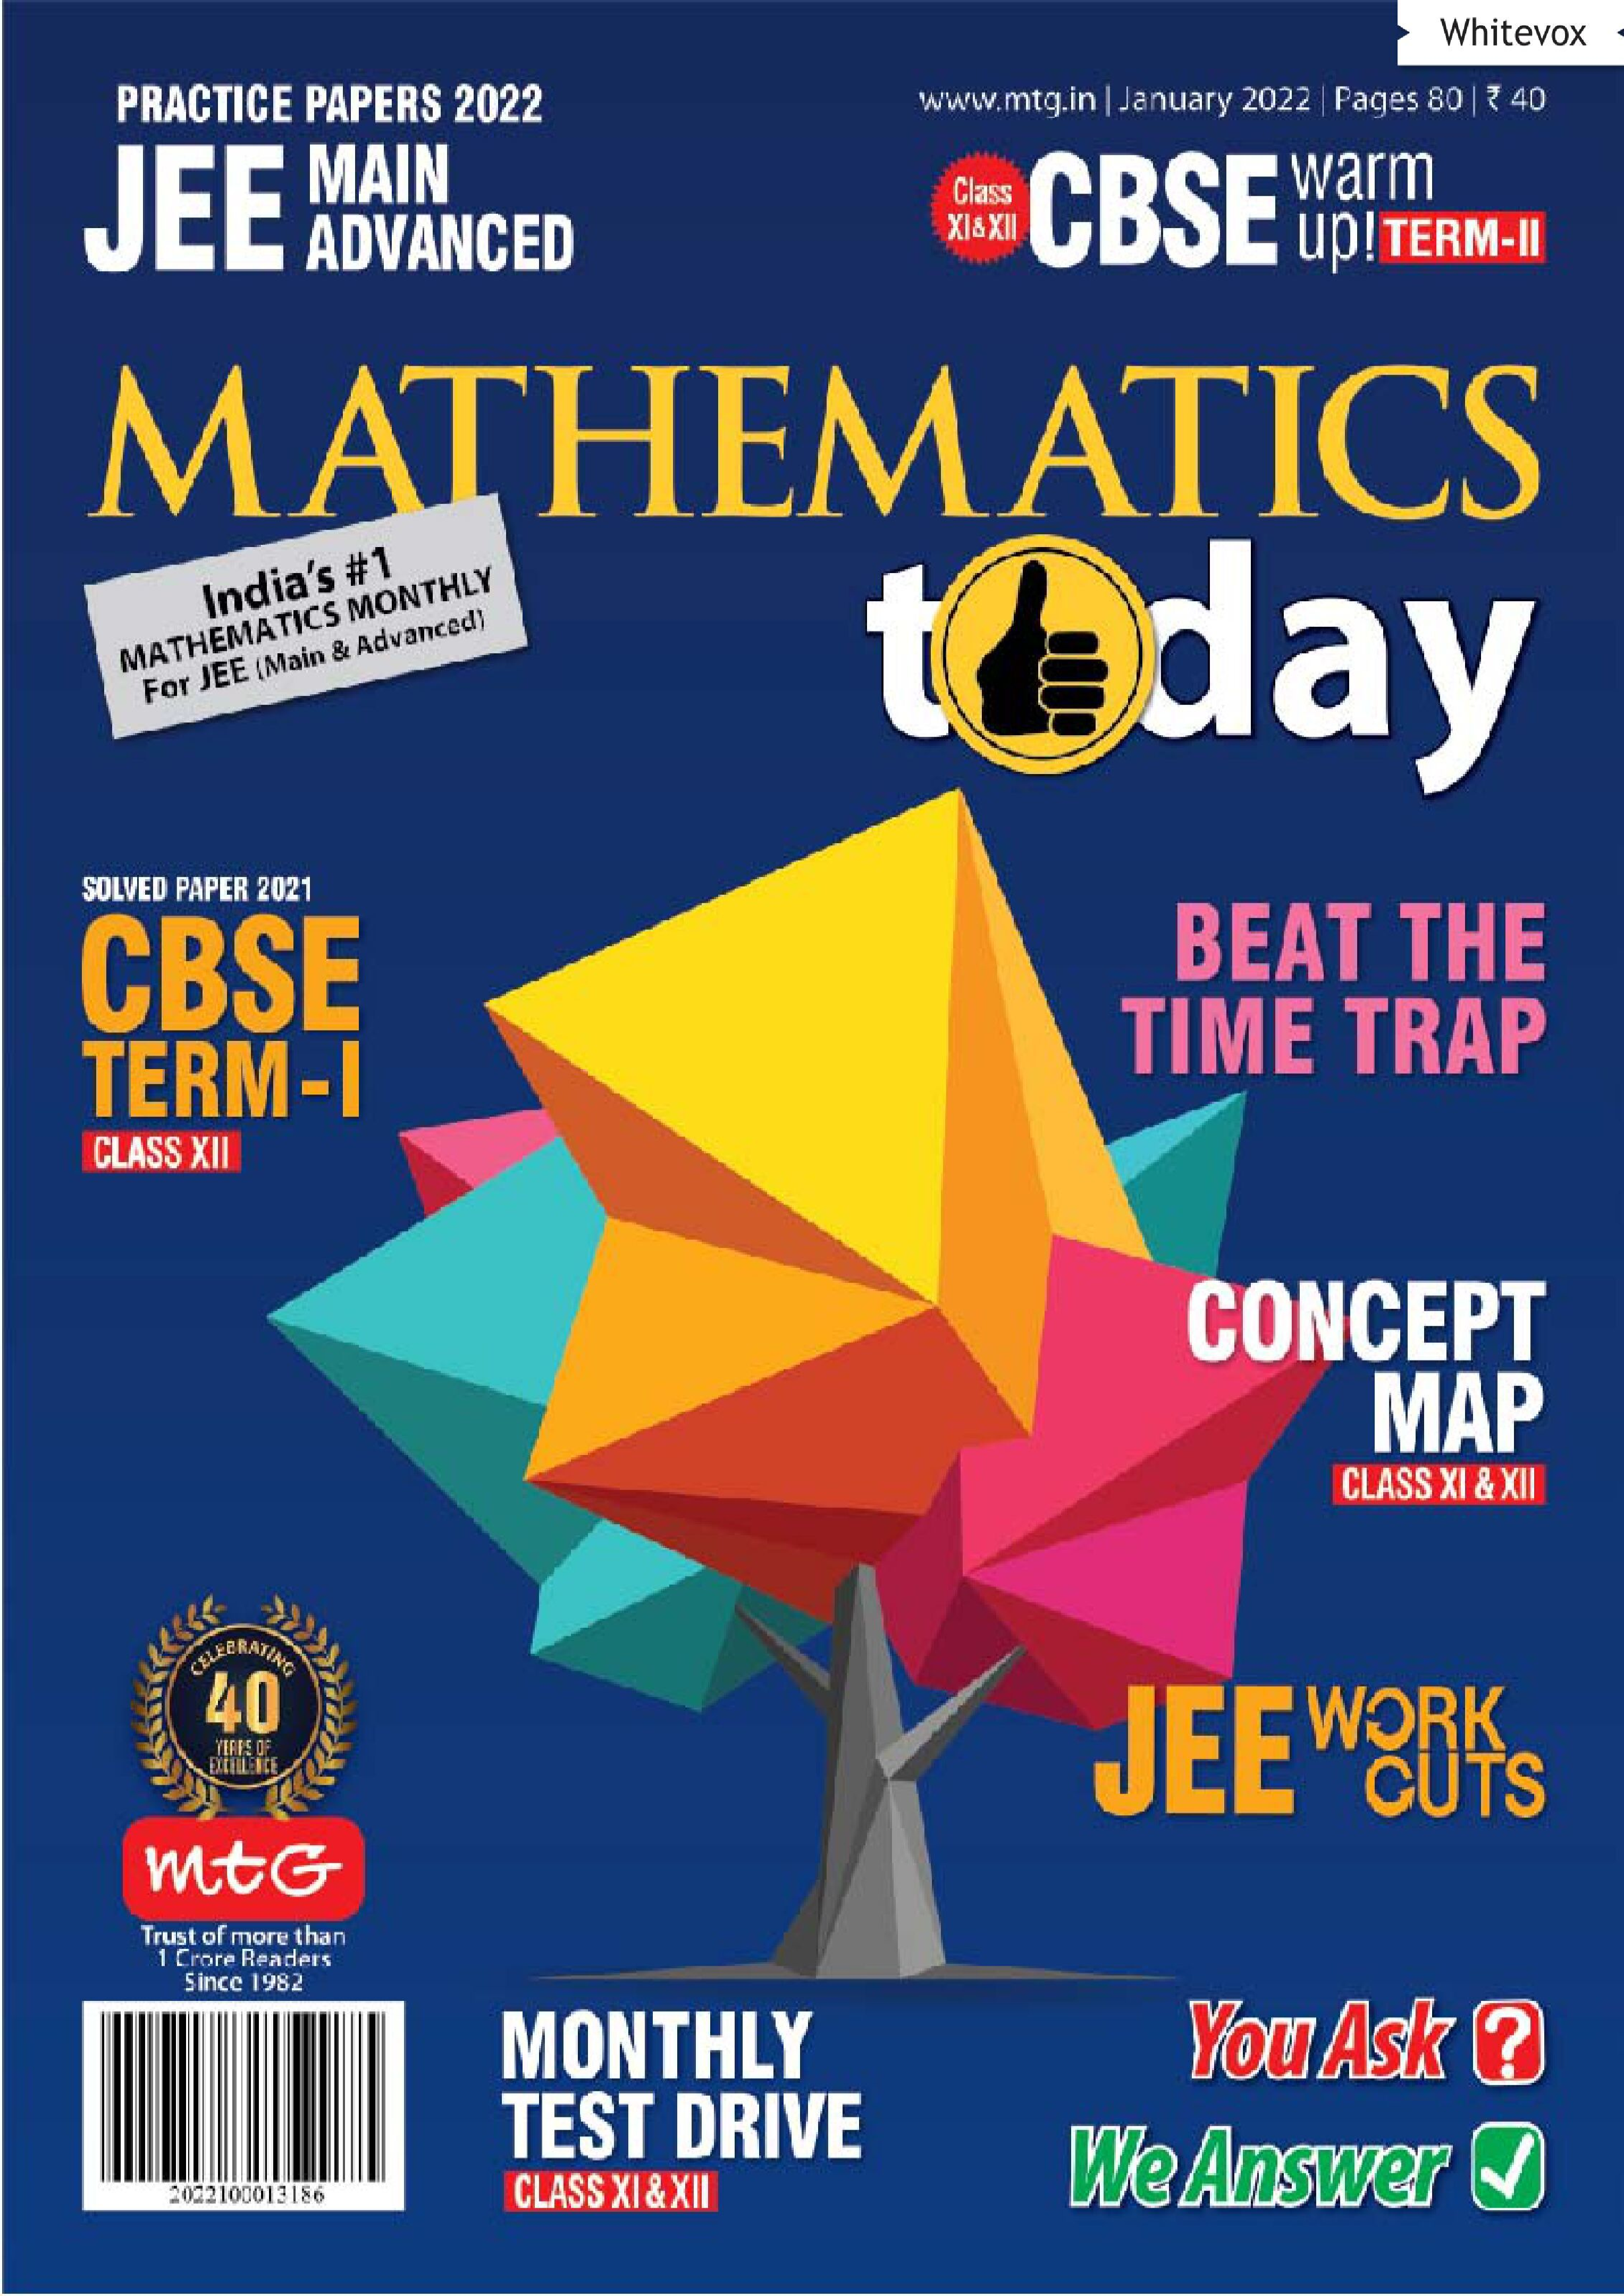 Mathematics Today JAN 2022